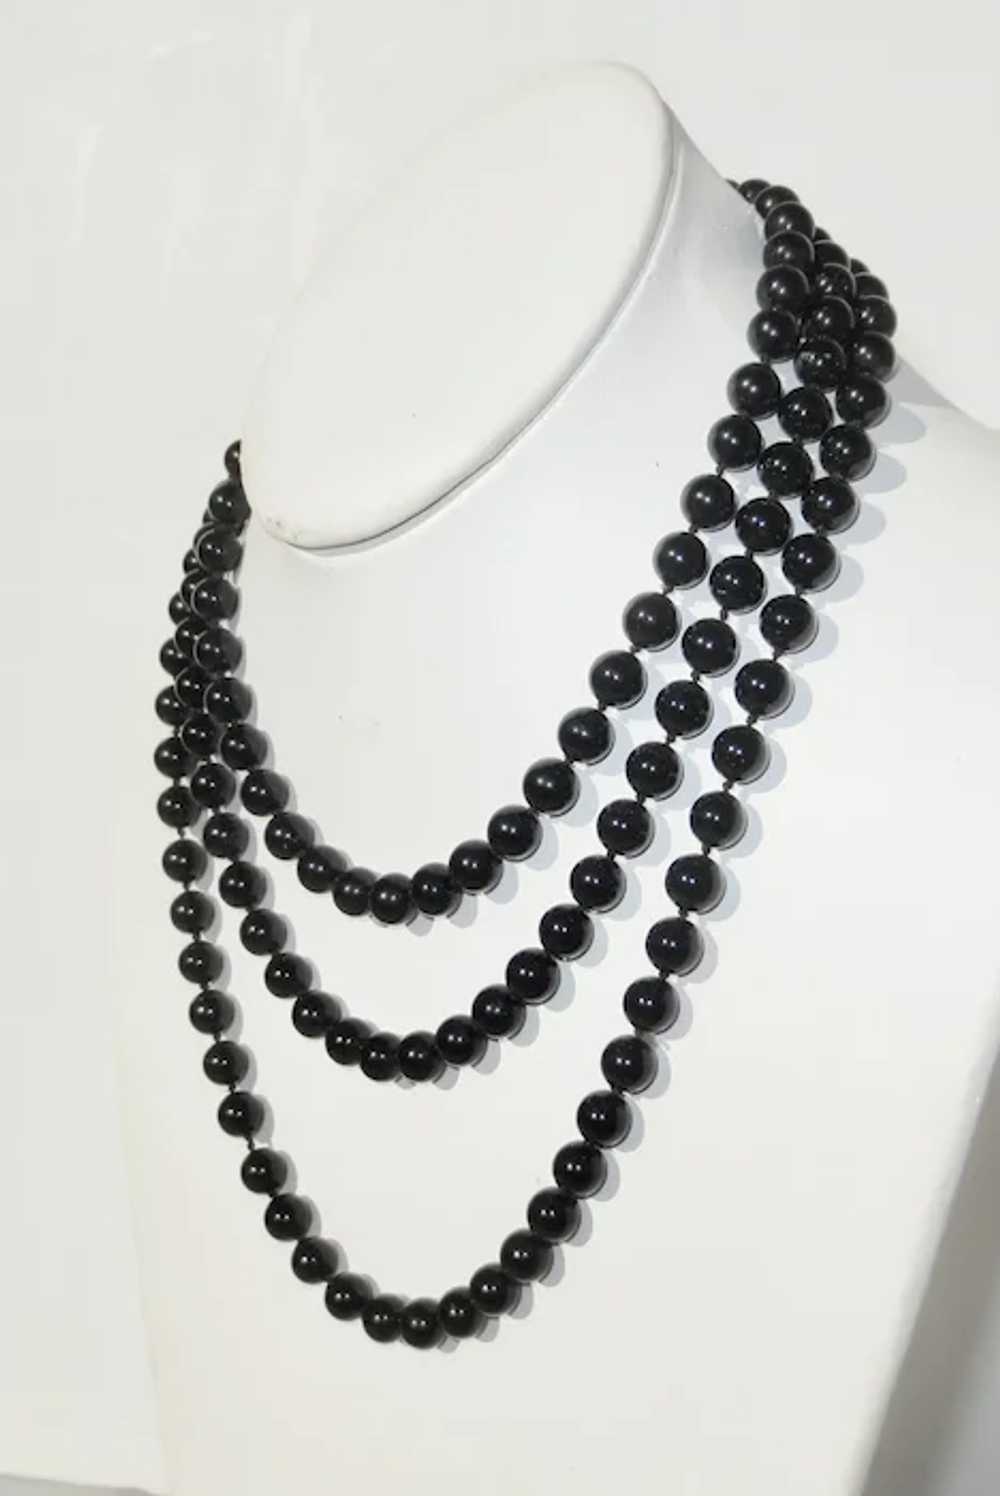 Vintage Black Onyx Necklace 54" long - image 2